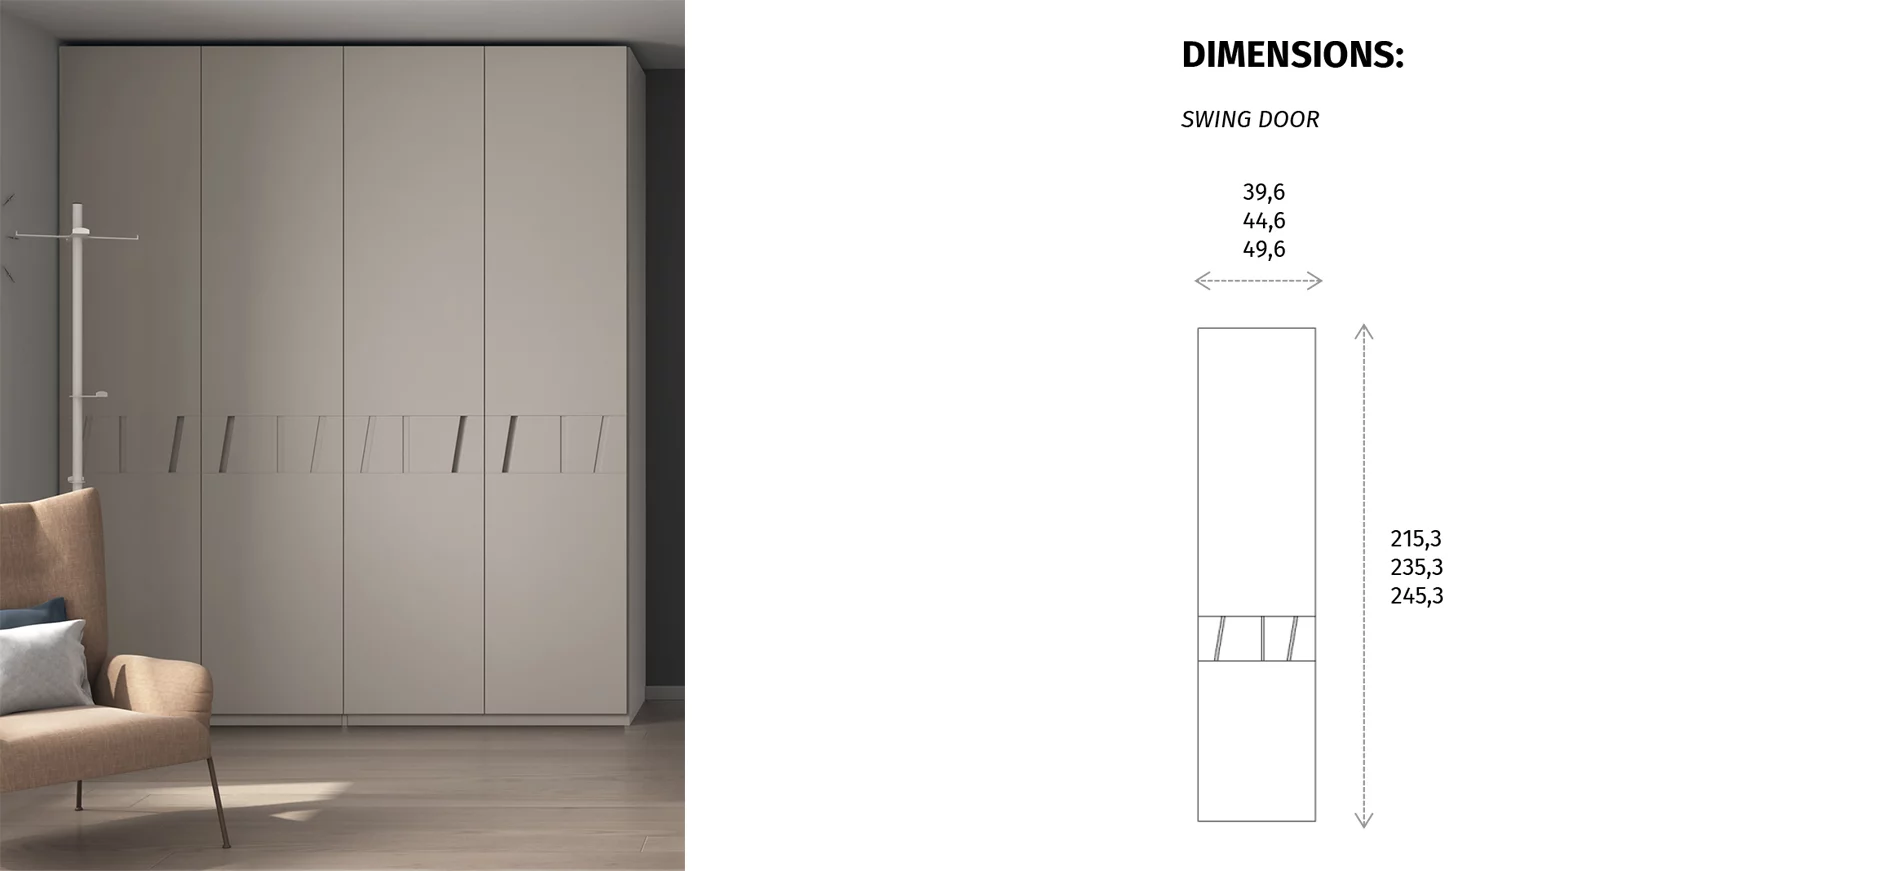 Dimensions.jpg